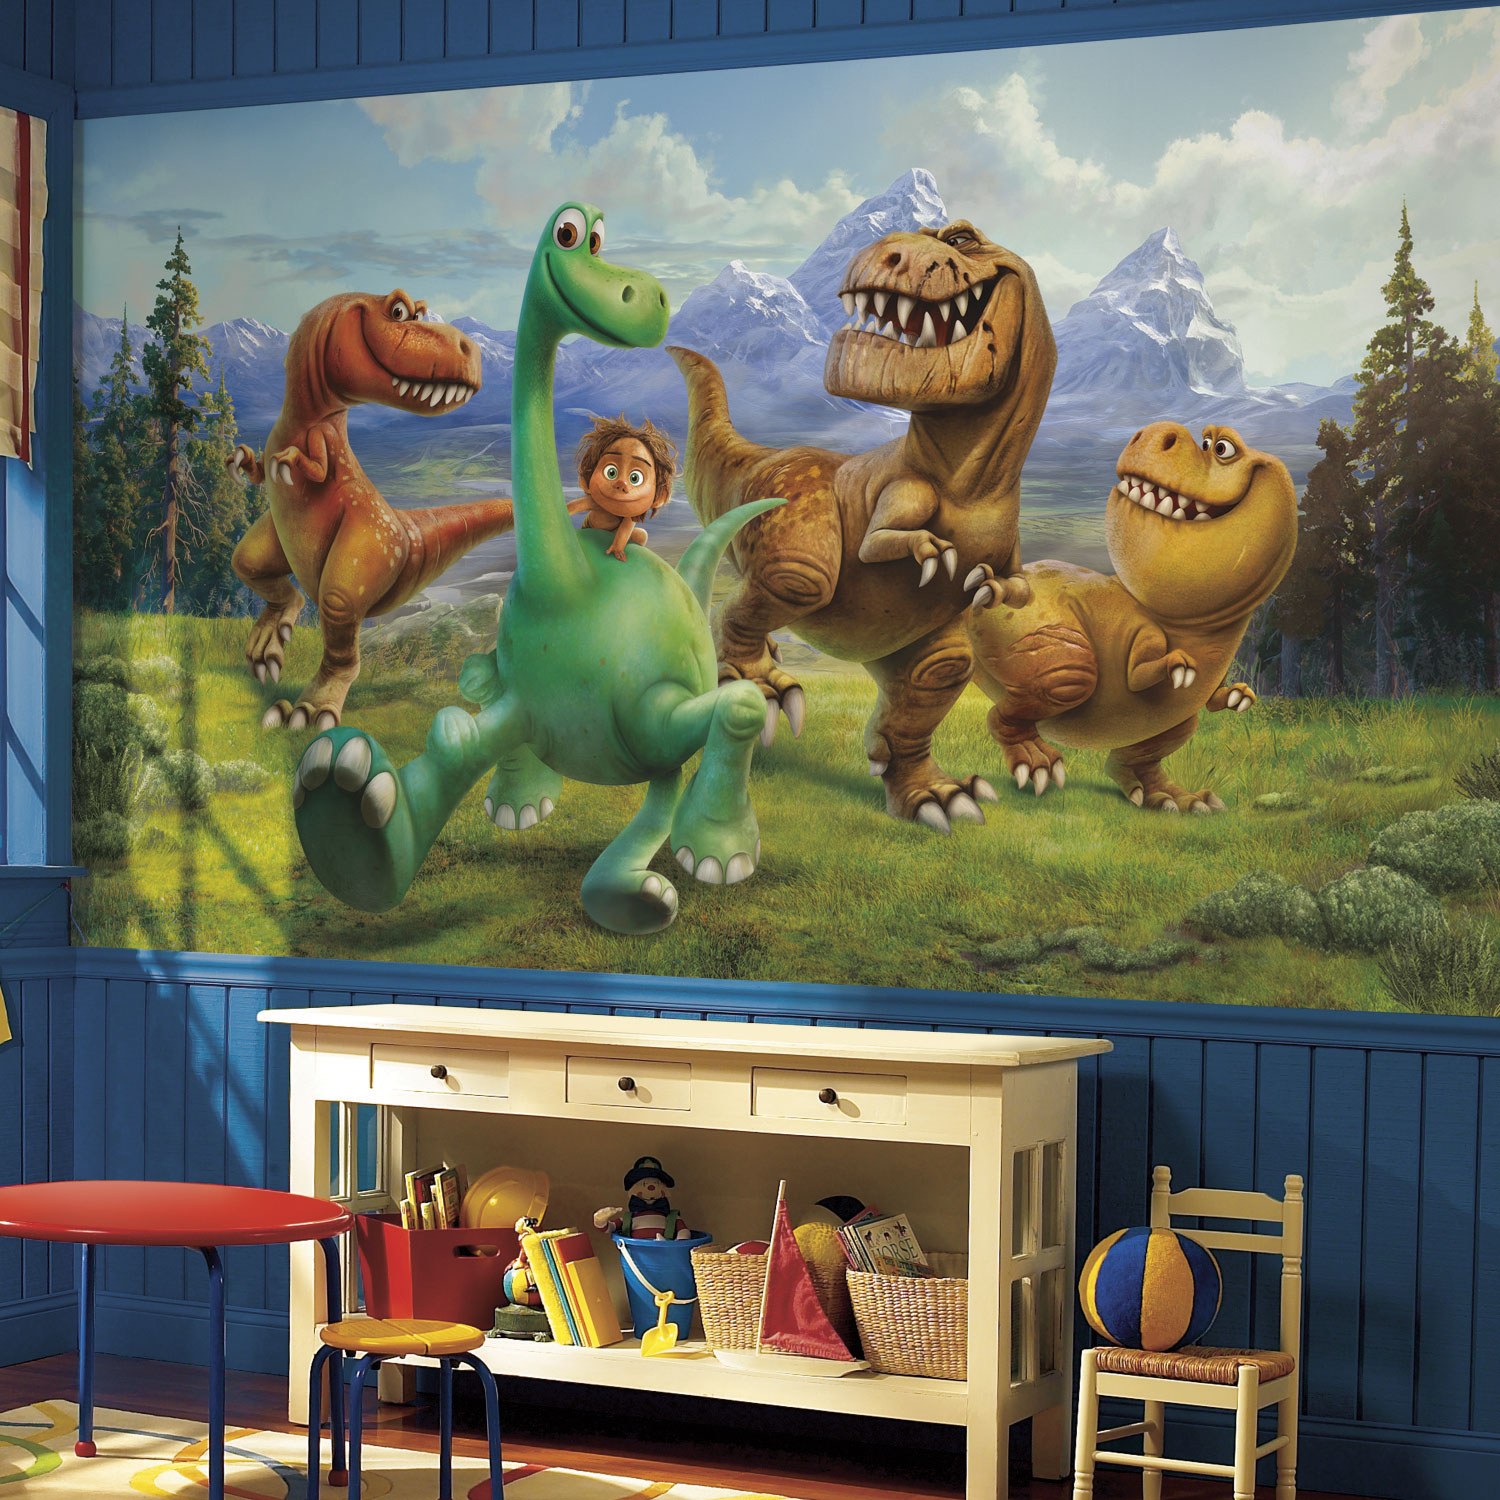 RoomMates Disney Pixar The Good Dinosaur XL Wallpaper Mural - Green/Blue